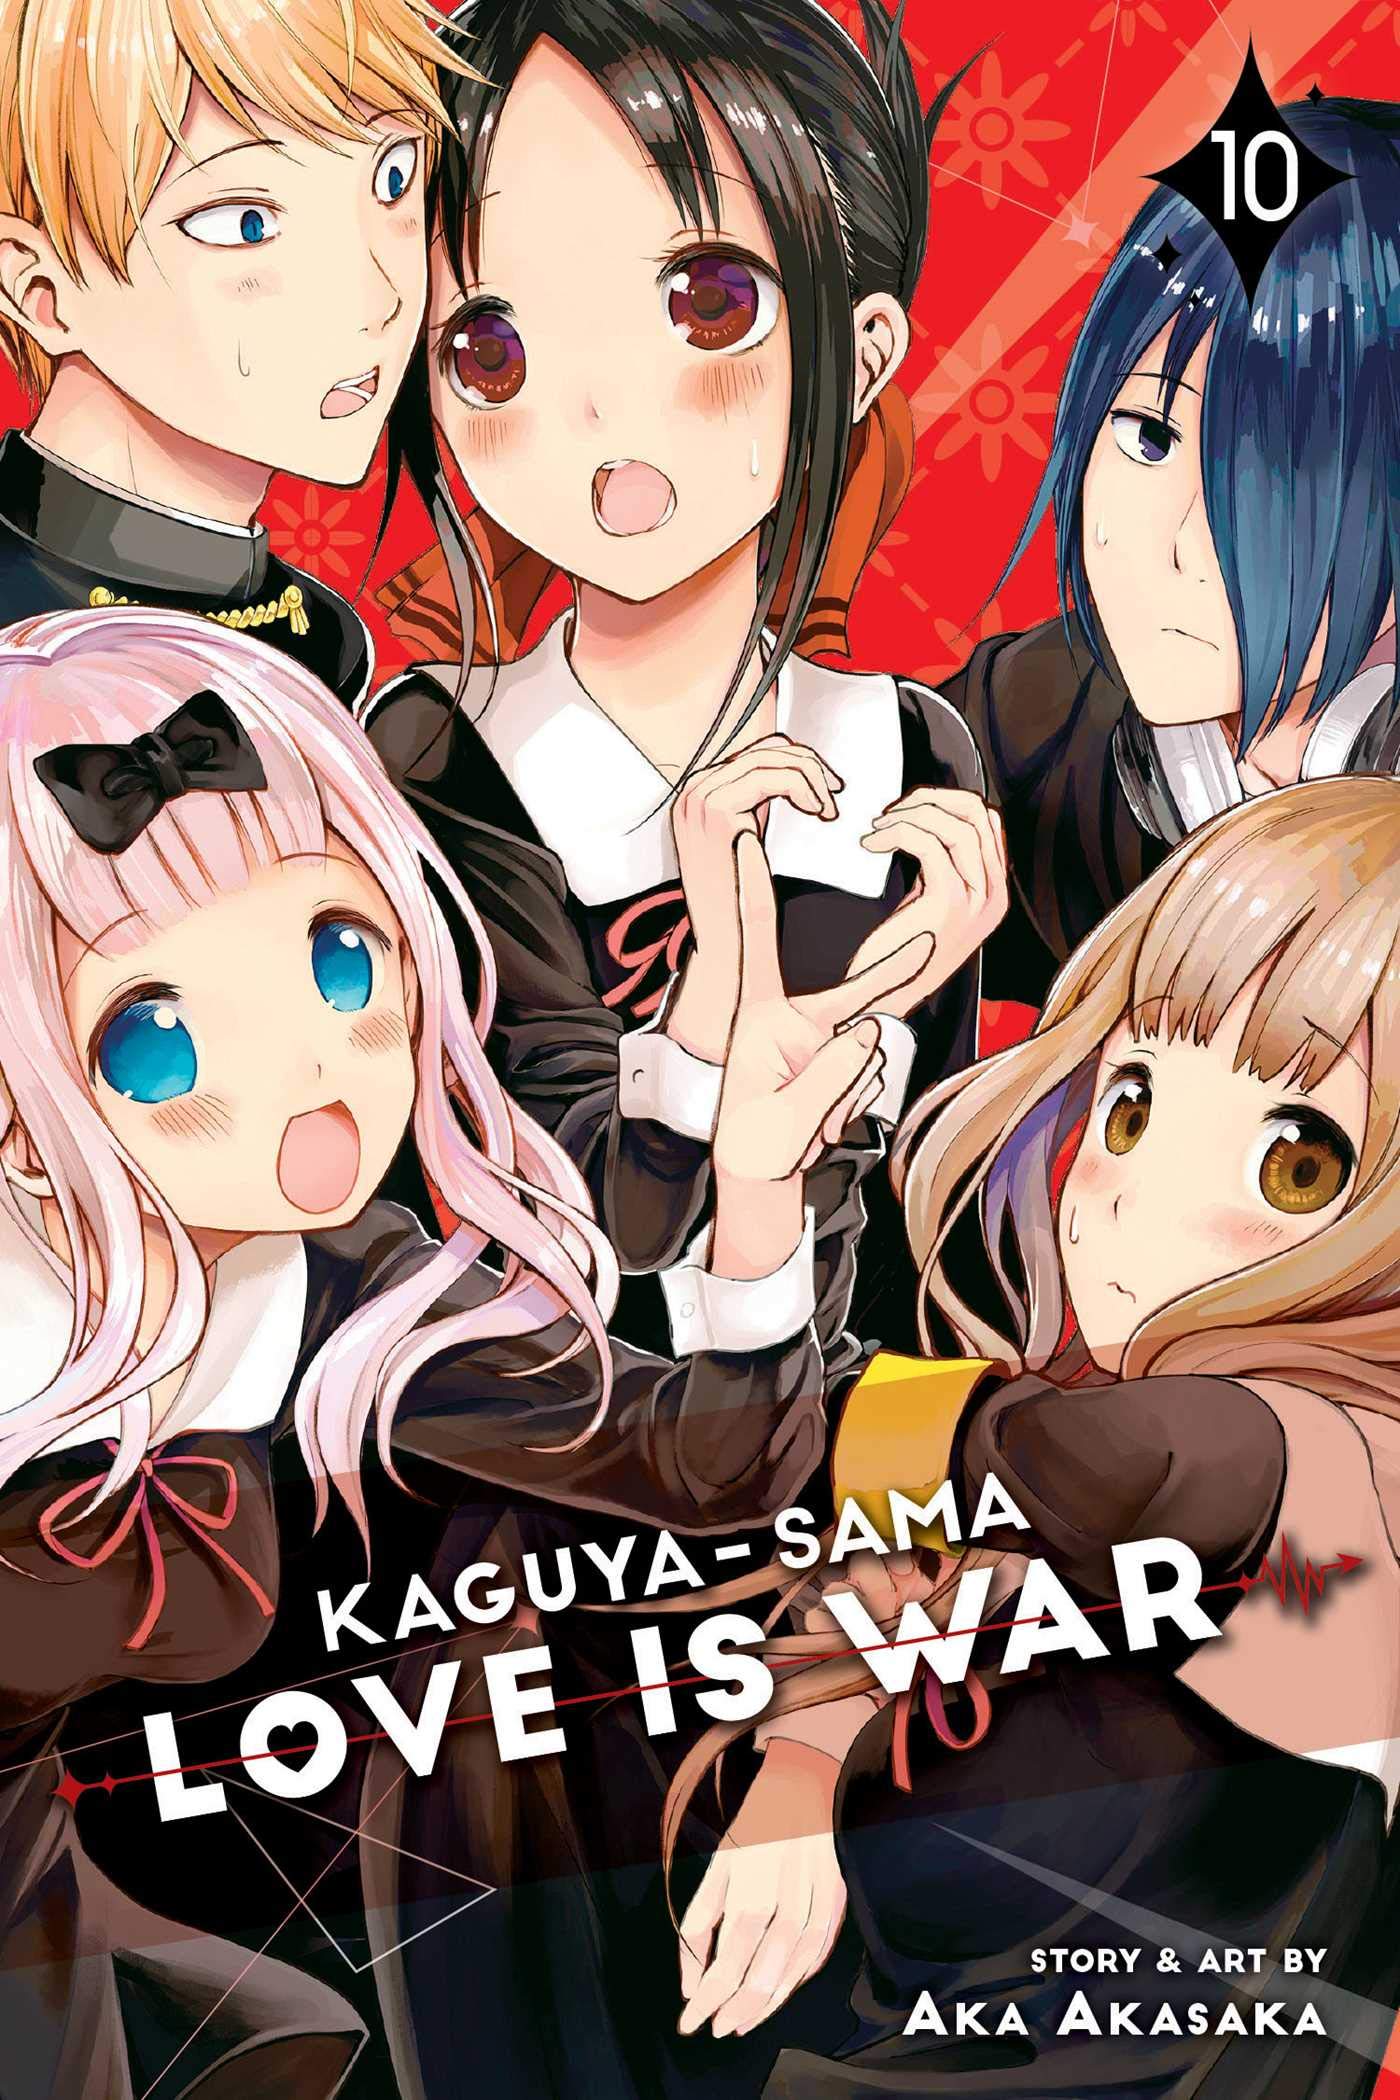 Kaguya-sama: Love is War manga surpassed 12 million copies in